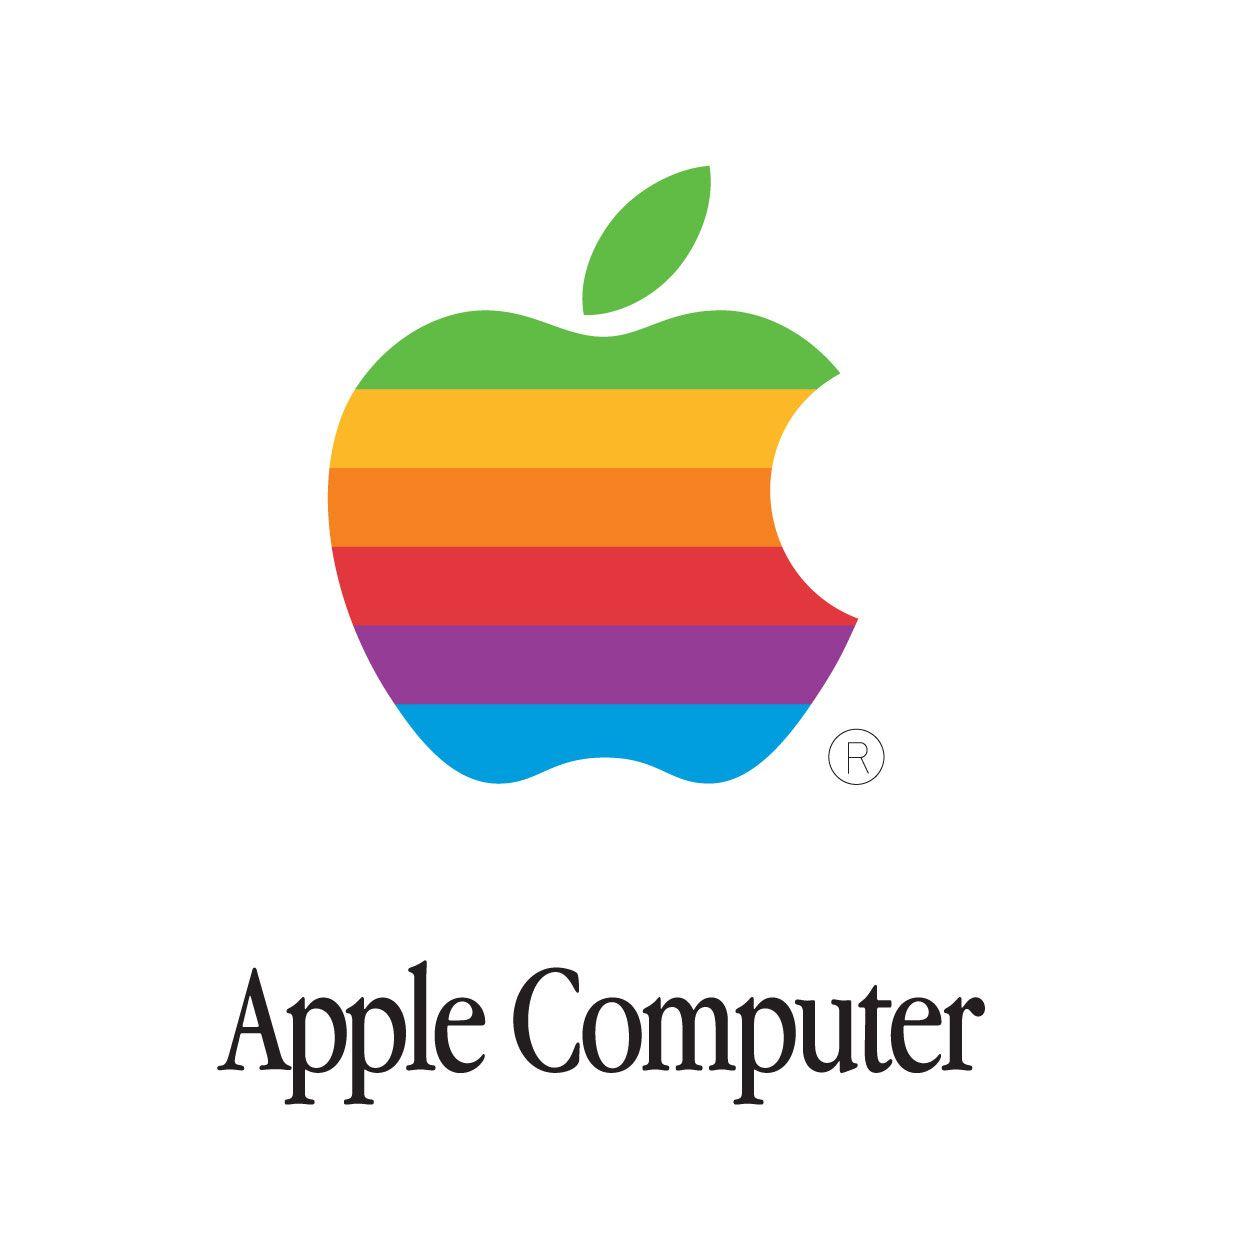 Old Mac Logo - Old-Apple-Computer-Logo - The Technology Geek